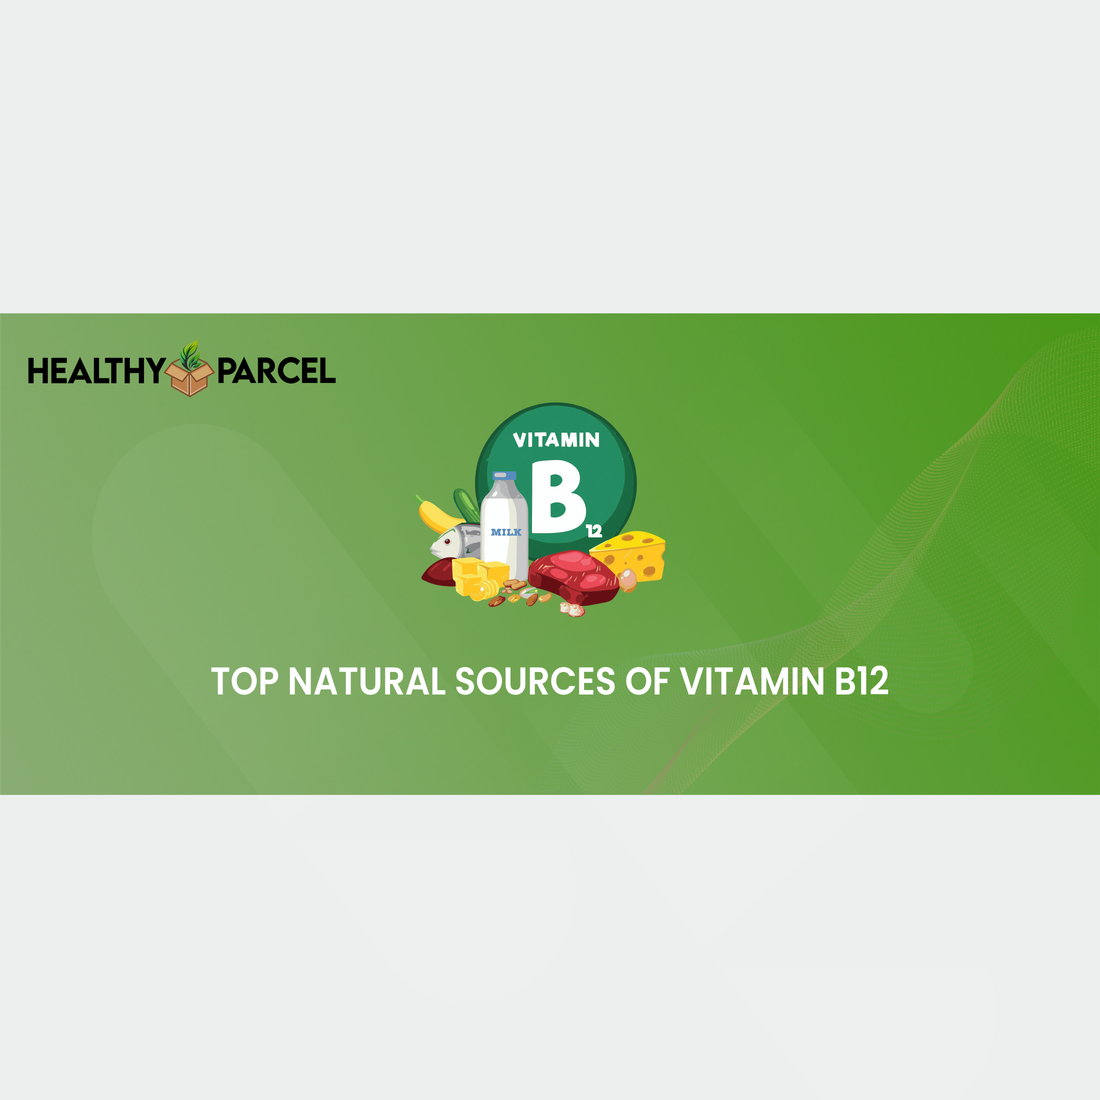 Top Natural Sources of Vitamin B12